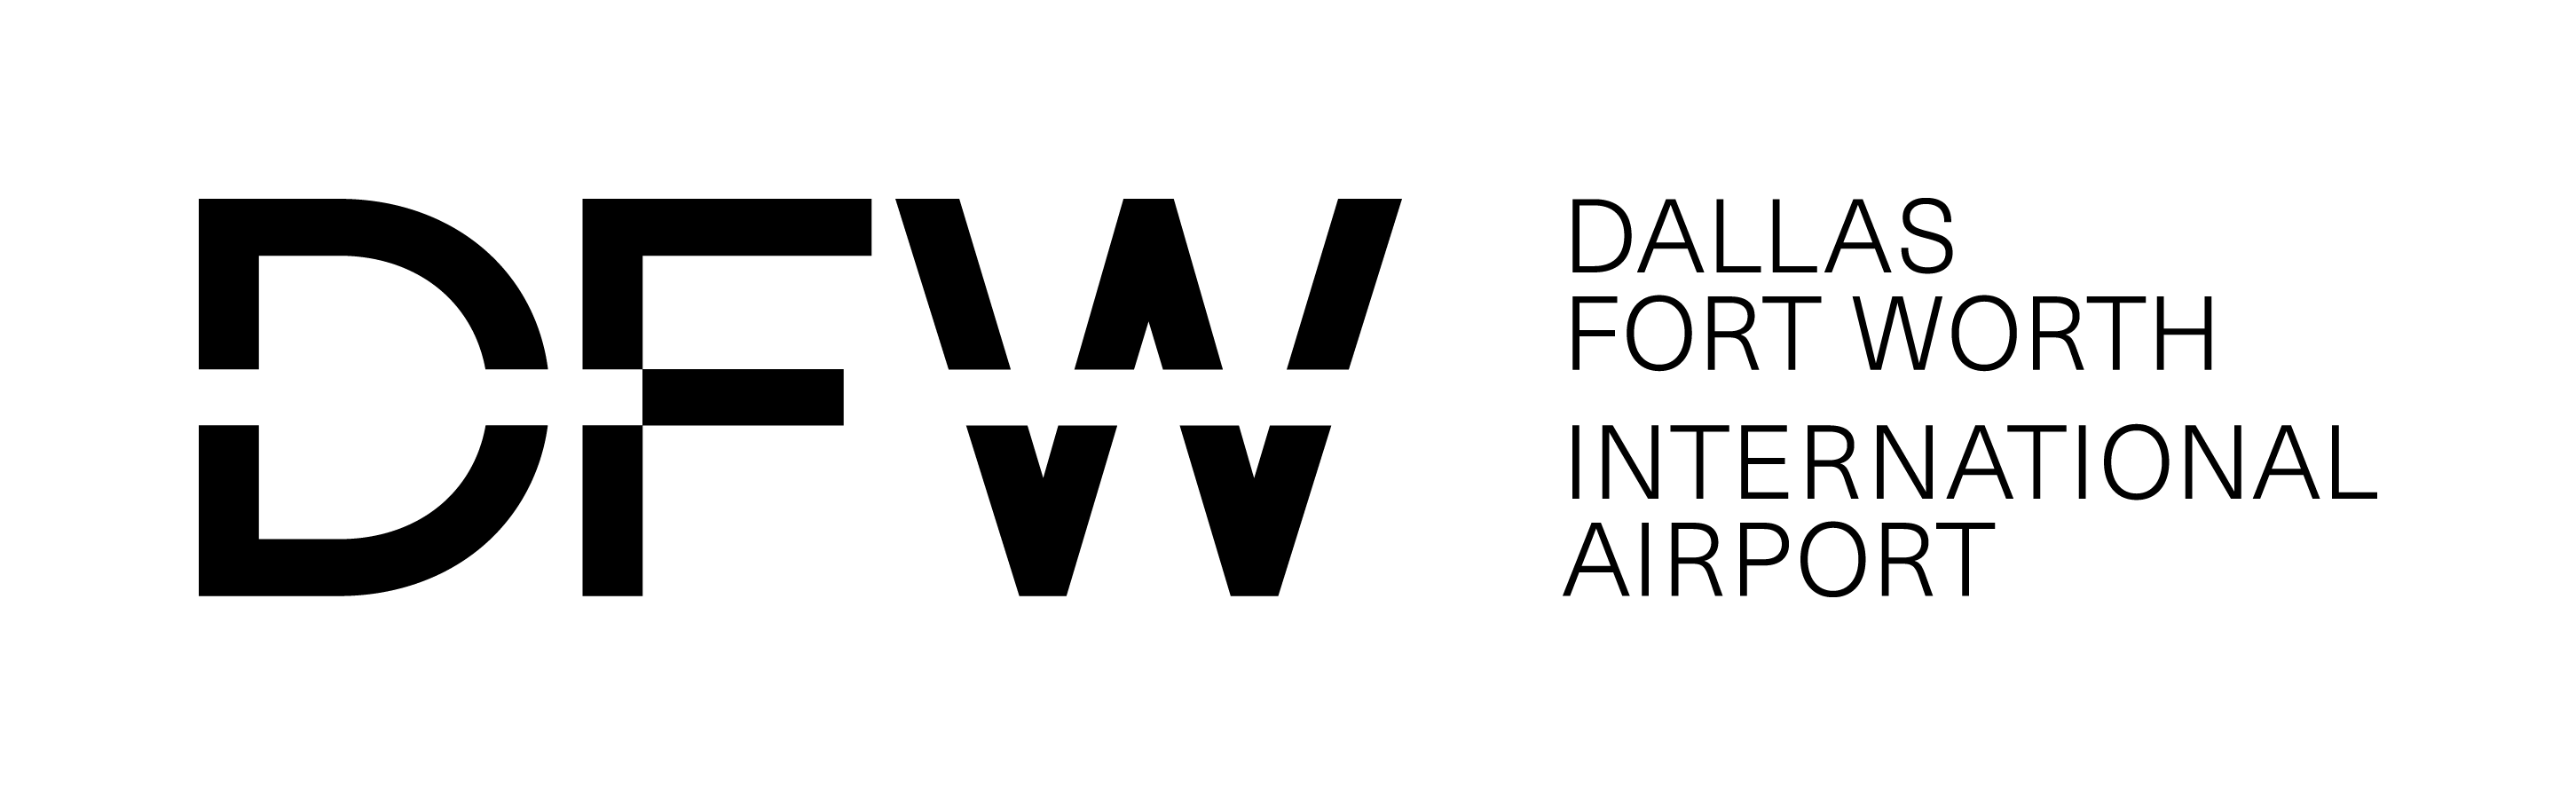 Dallas Logo - DFW International Airport